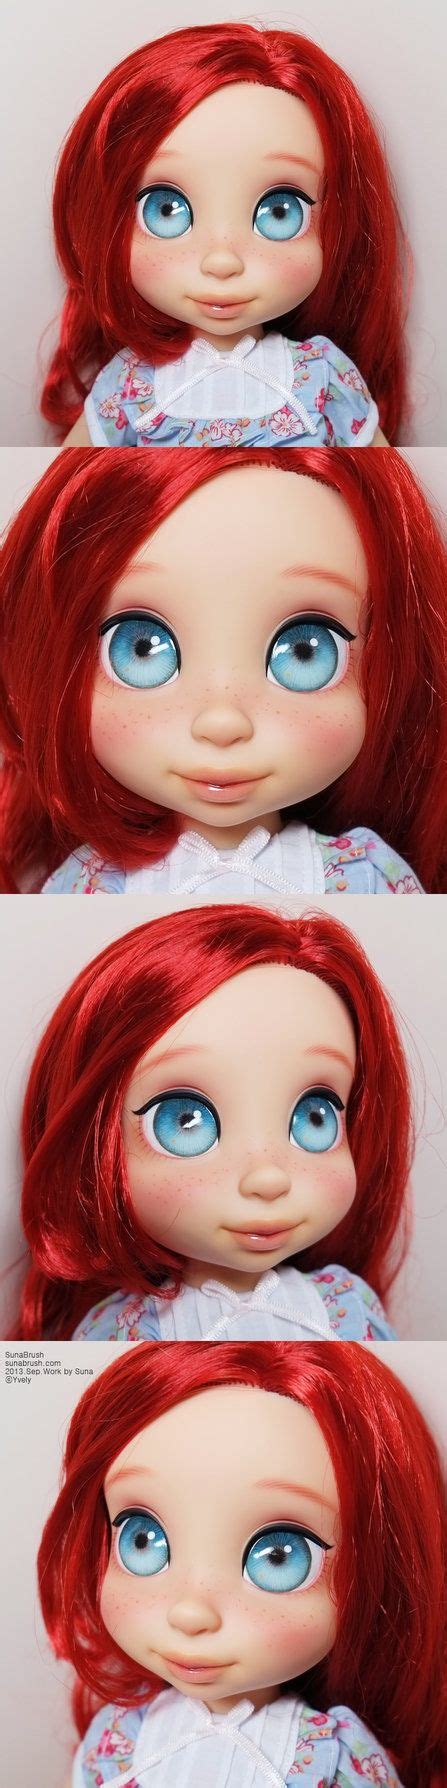 Disney Animators Collection Dolls Ariel By Yvely On Deviantart